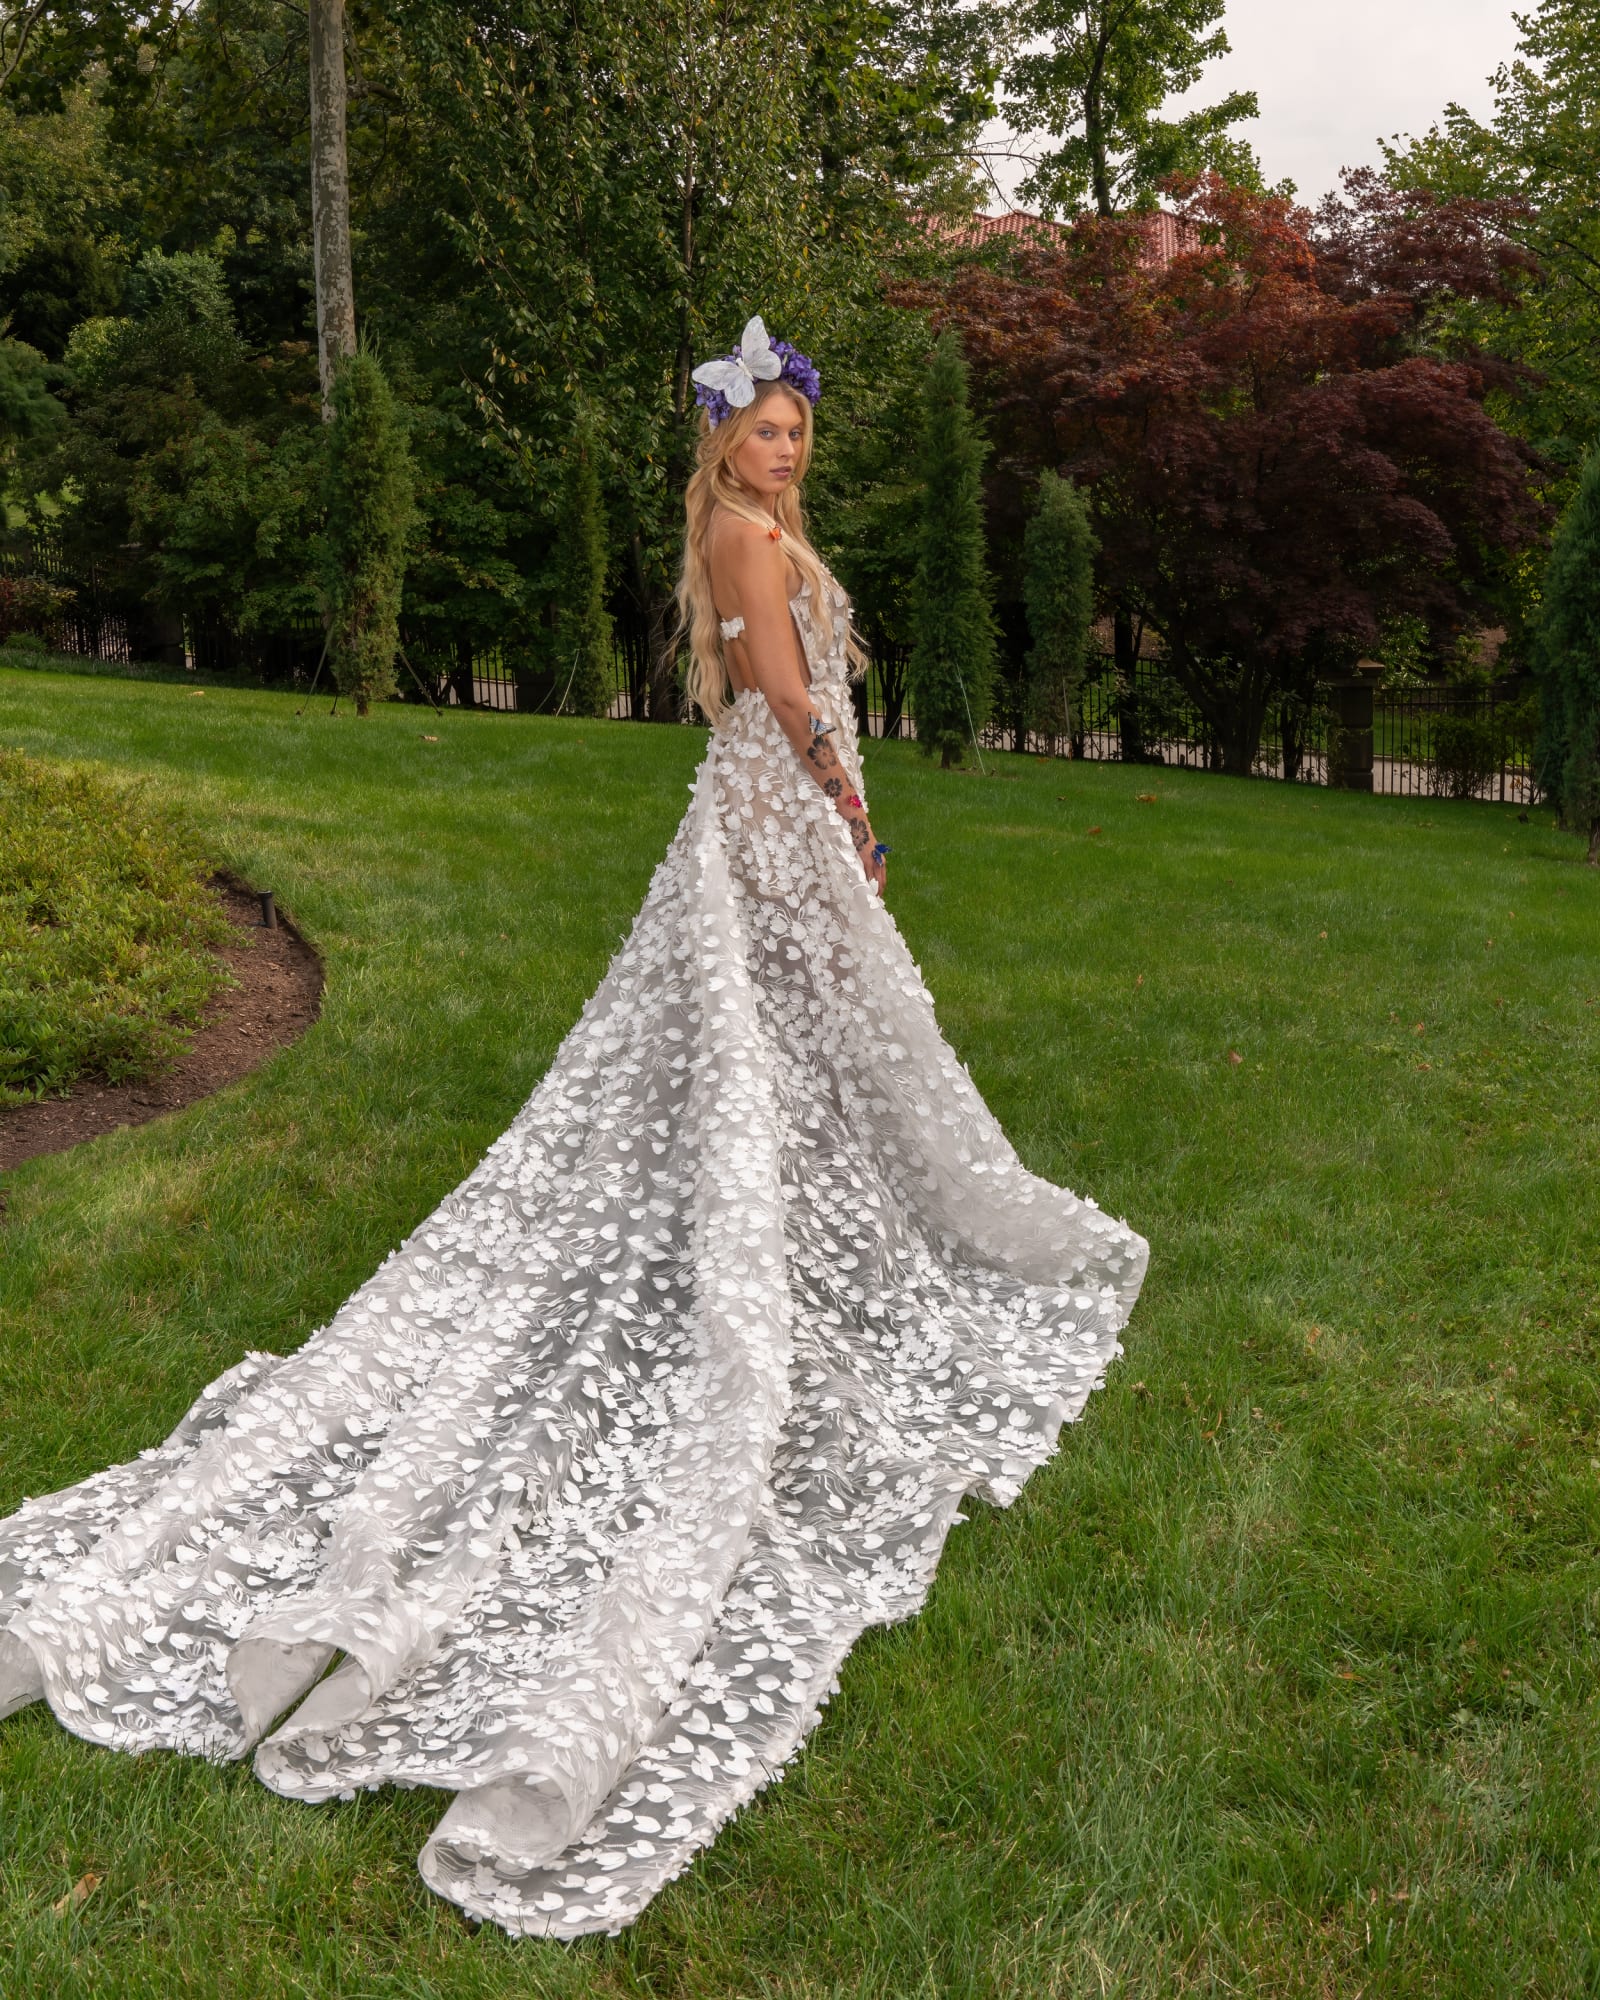 Floral Wedding Dresses: 30 Magical Looks + Faqs | Wedding dresses, Bridal  gowns, Bride